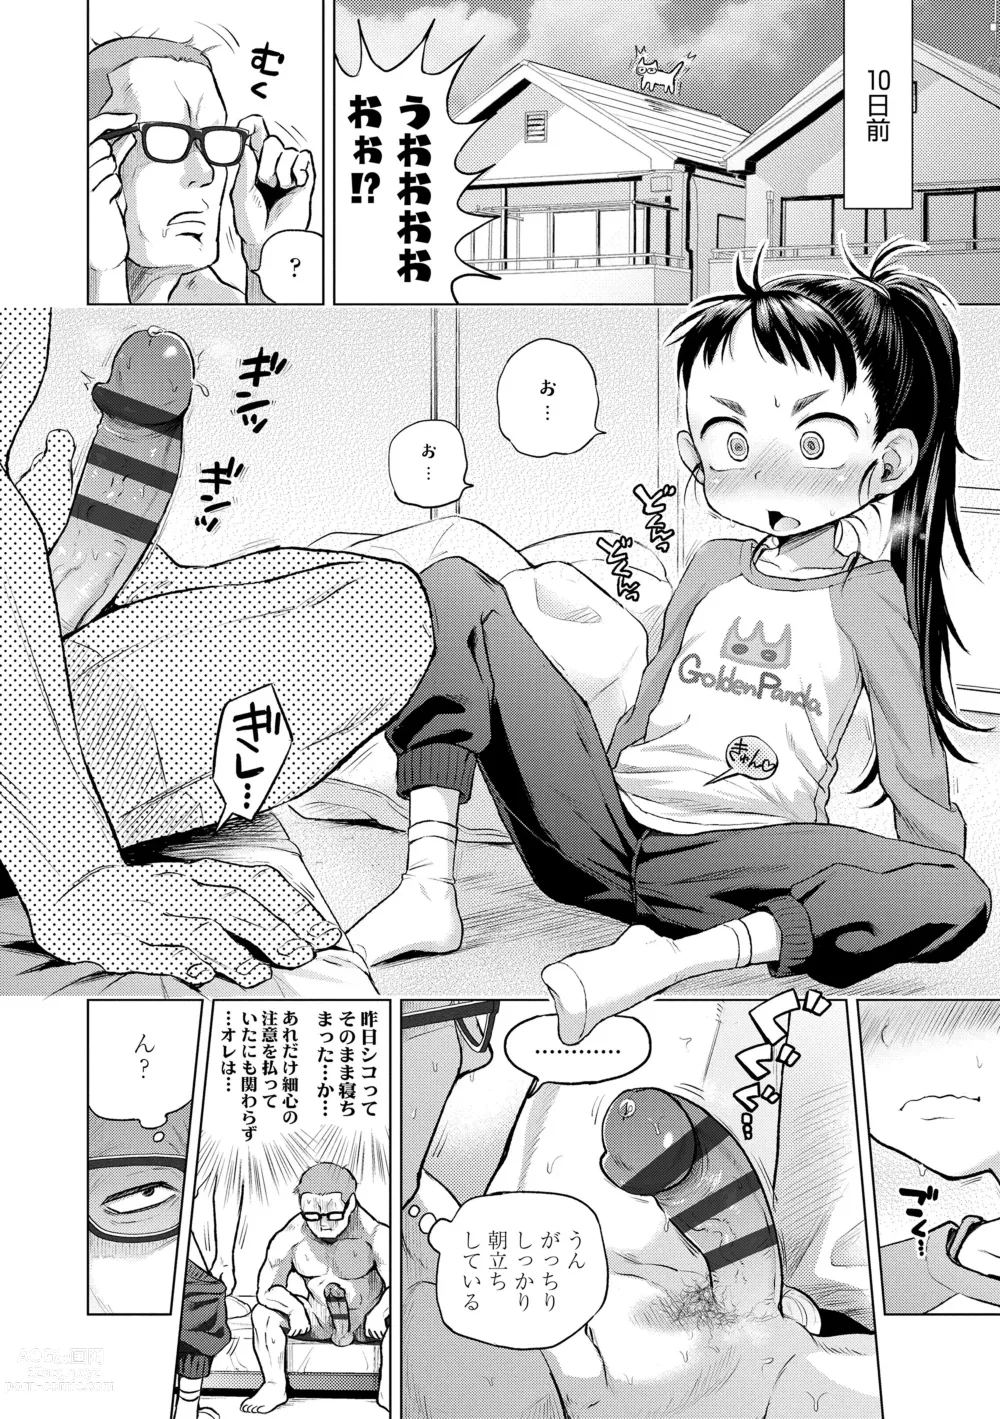 Page 8 of manga Puchi Love Kingdom